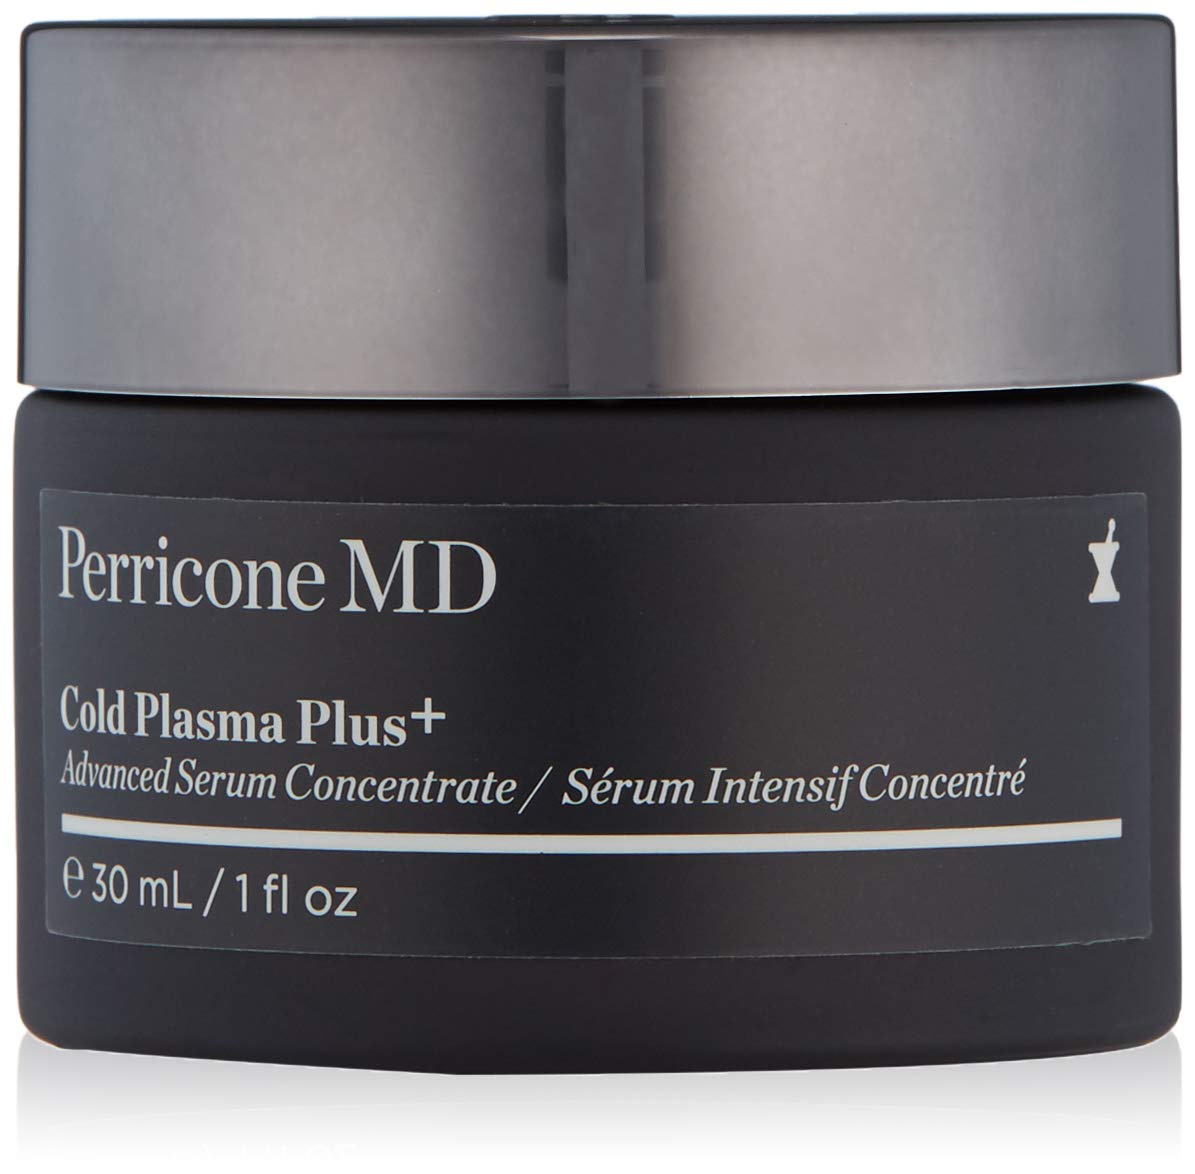 Perricone MD Cold Plasma Plus+ Advanced Serum